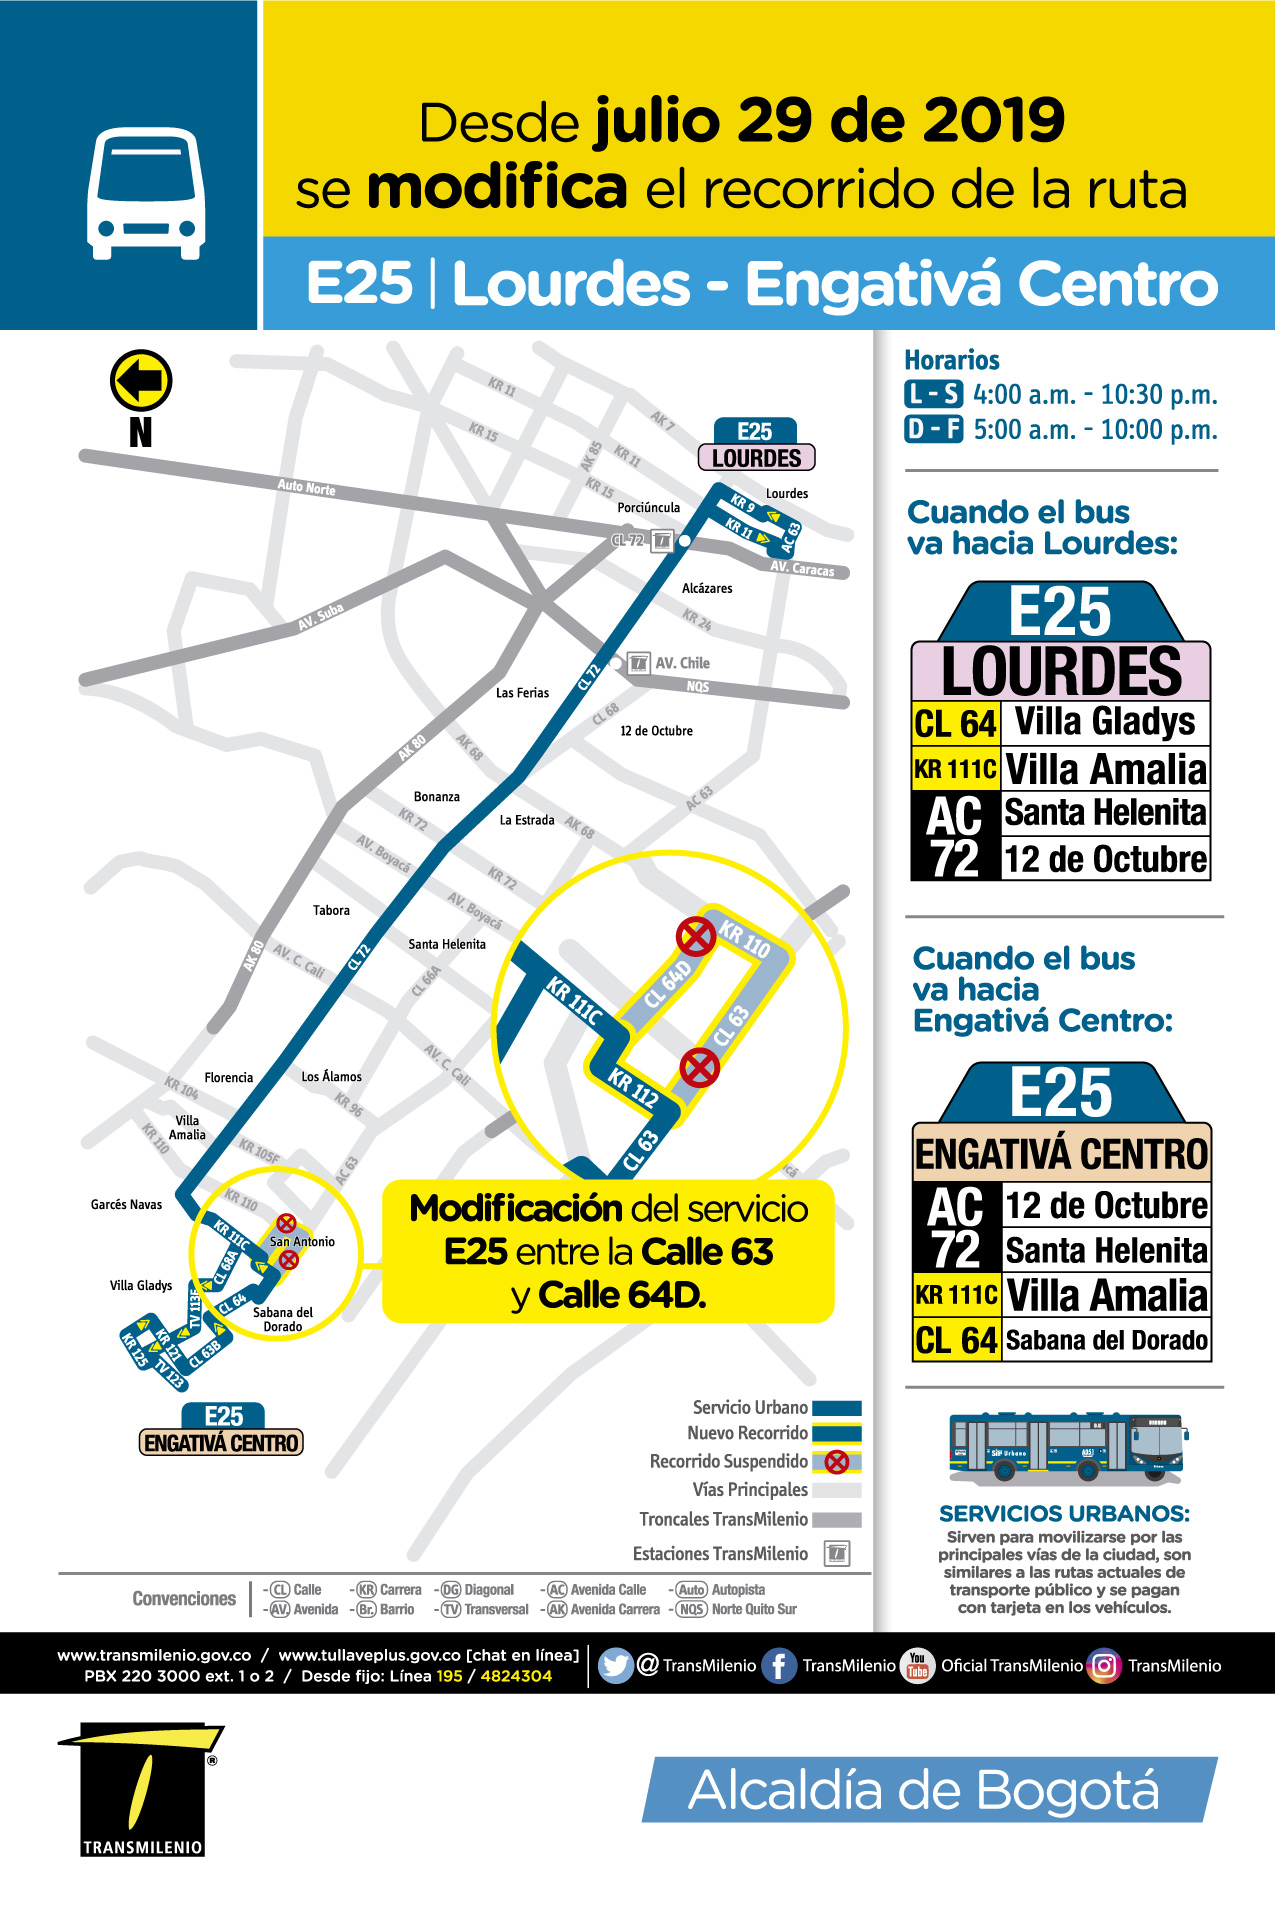 Mapa de la ruta E25 con novedades